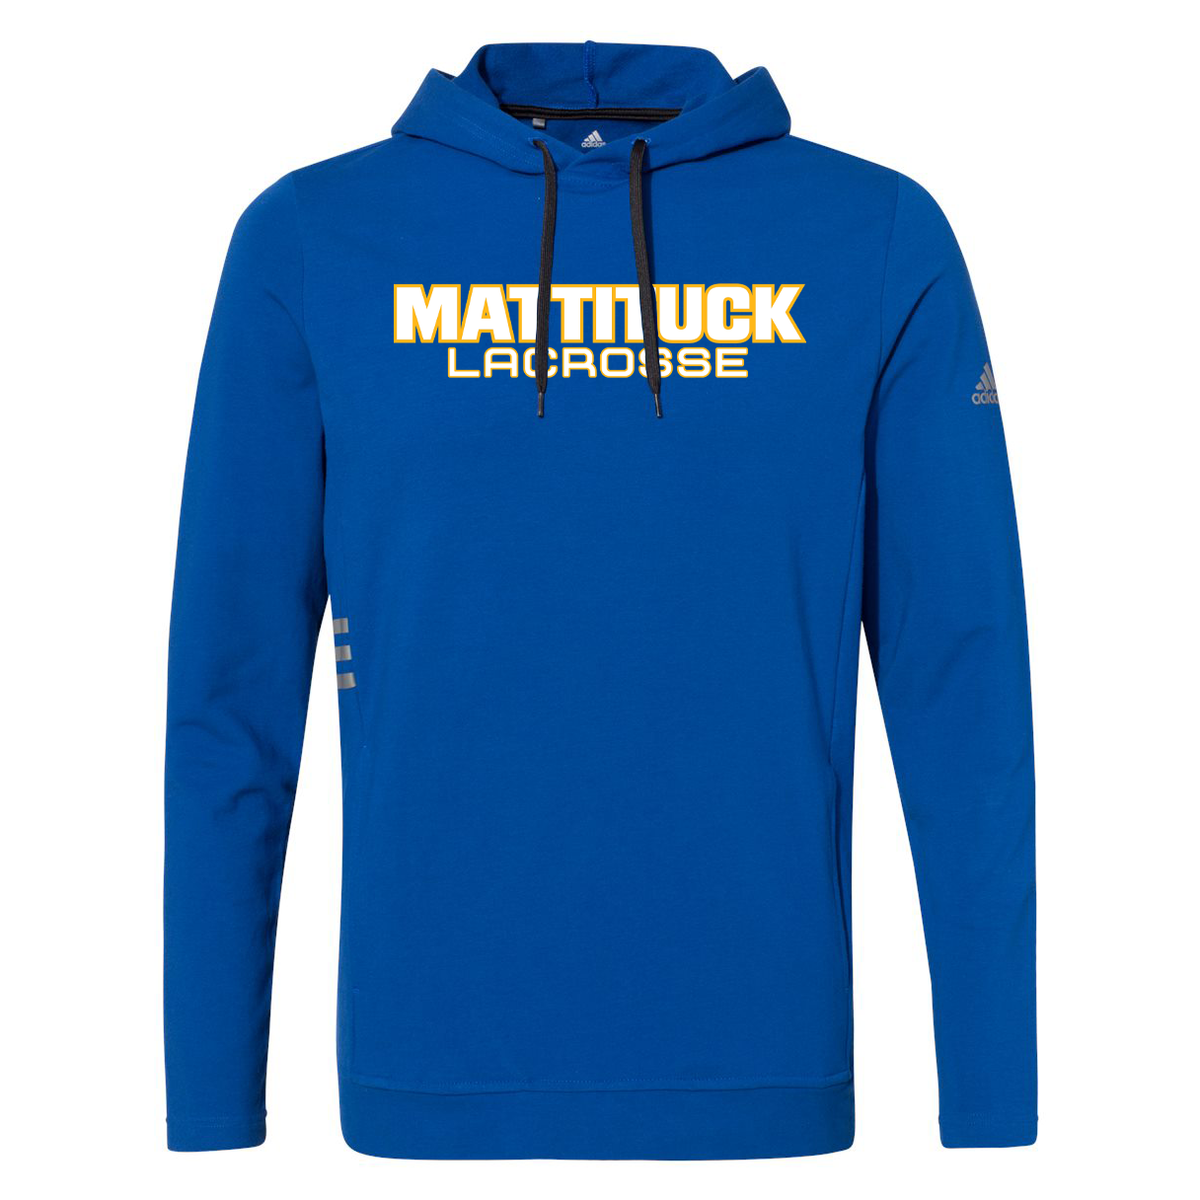 Mattituck Lacrosse Adidas Sweatshirt